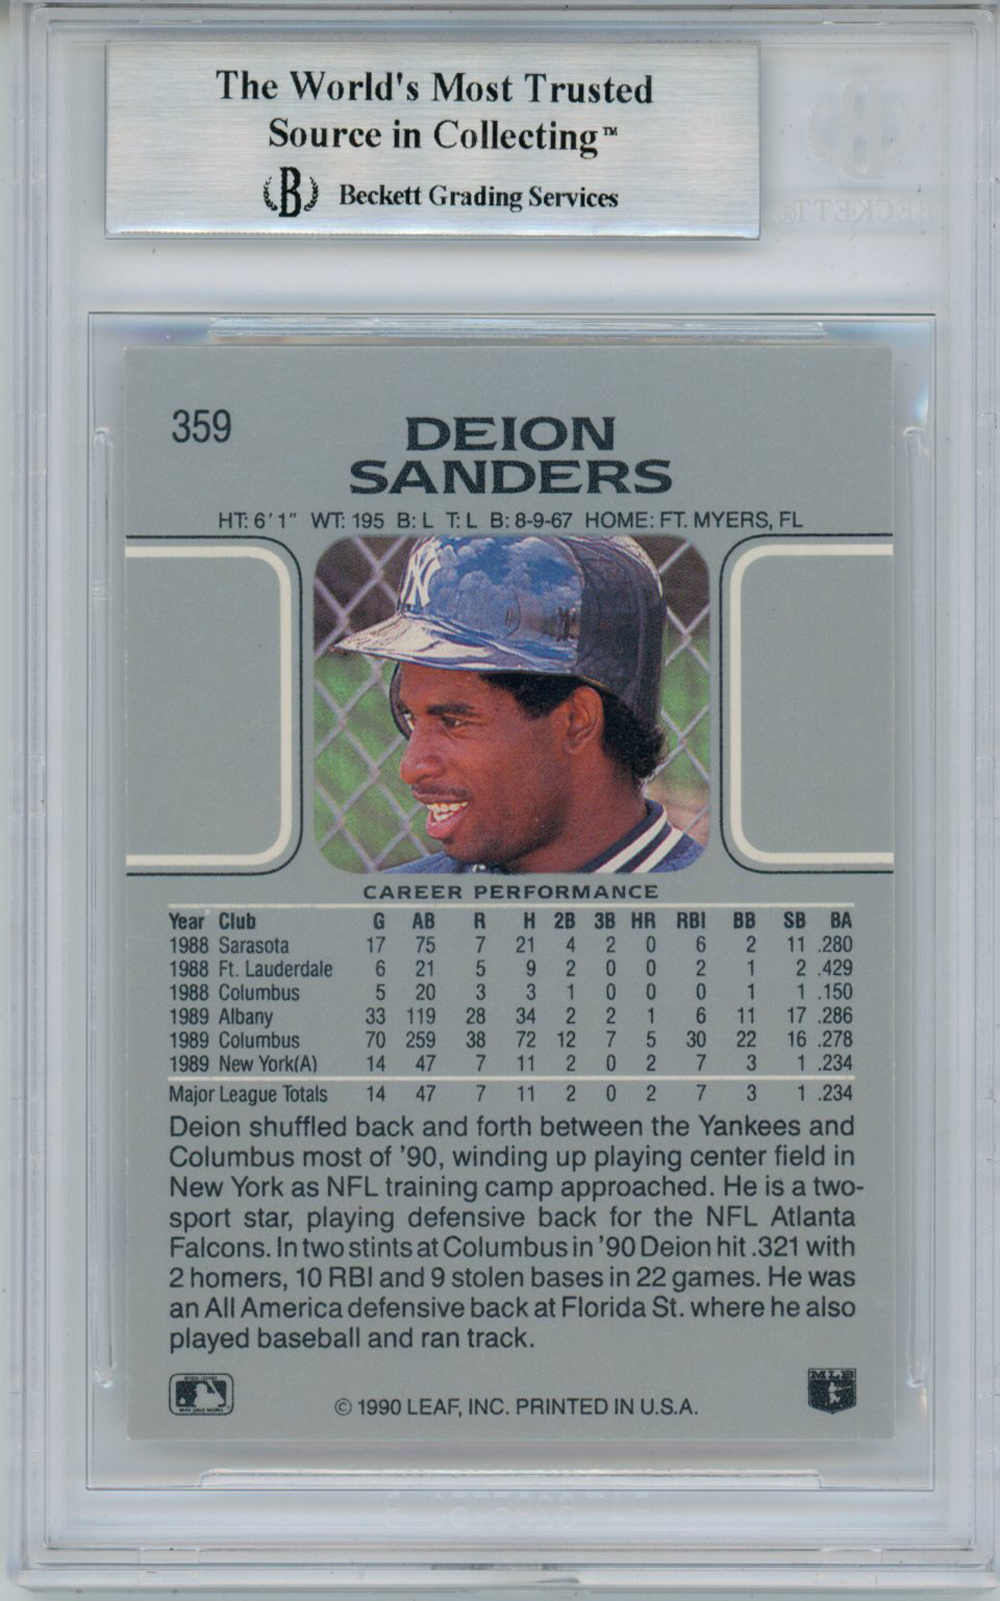 Deion Sanders Autographed/Signed 1990 Leaf Trading Card BAS Slab